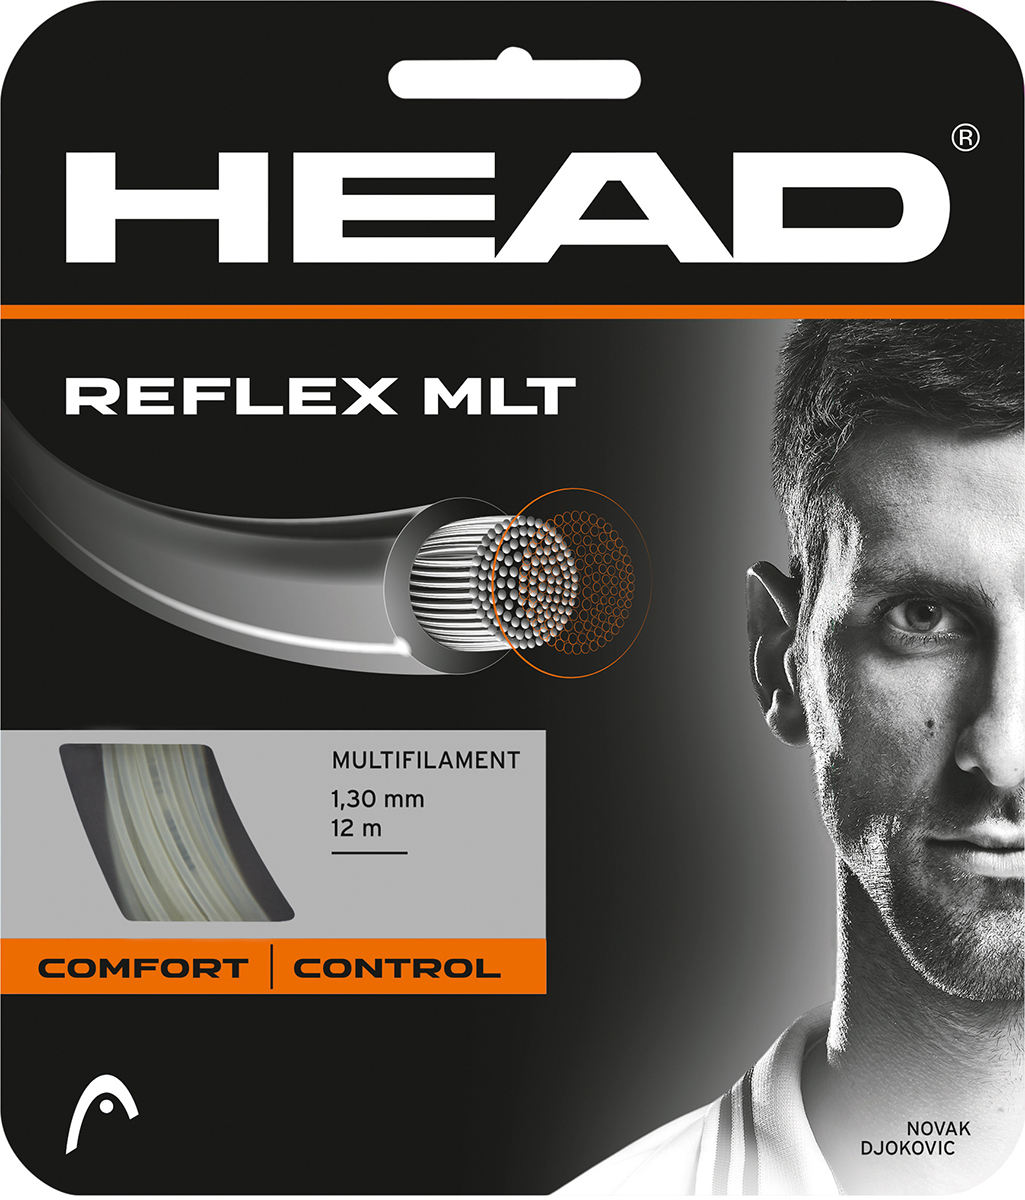 Head Reflex MLT 17g Tennis String (Set)